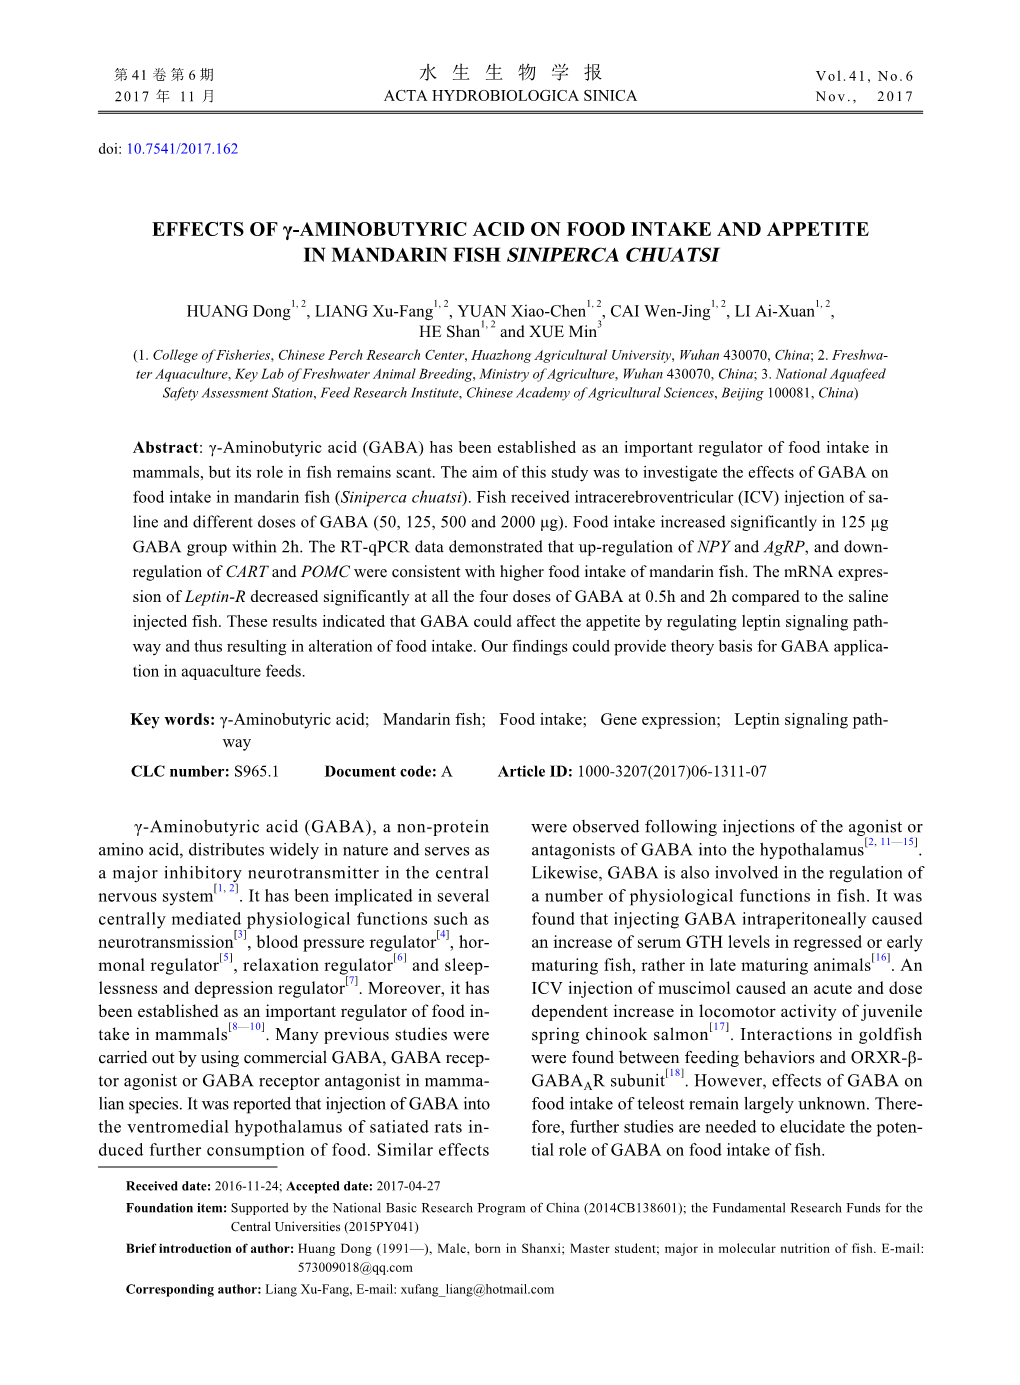 Effects of Γ-Aminobutyric Acid on Food Intake and Appetite in Mandarin Fish Siniperca Chuatsi